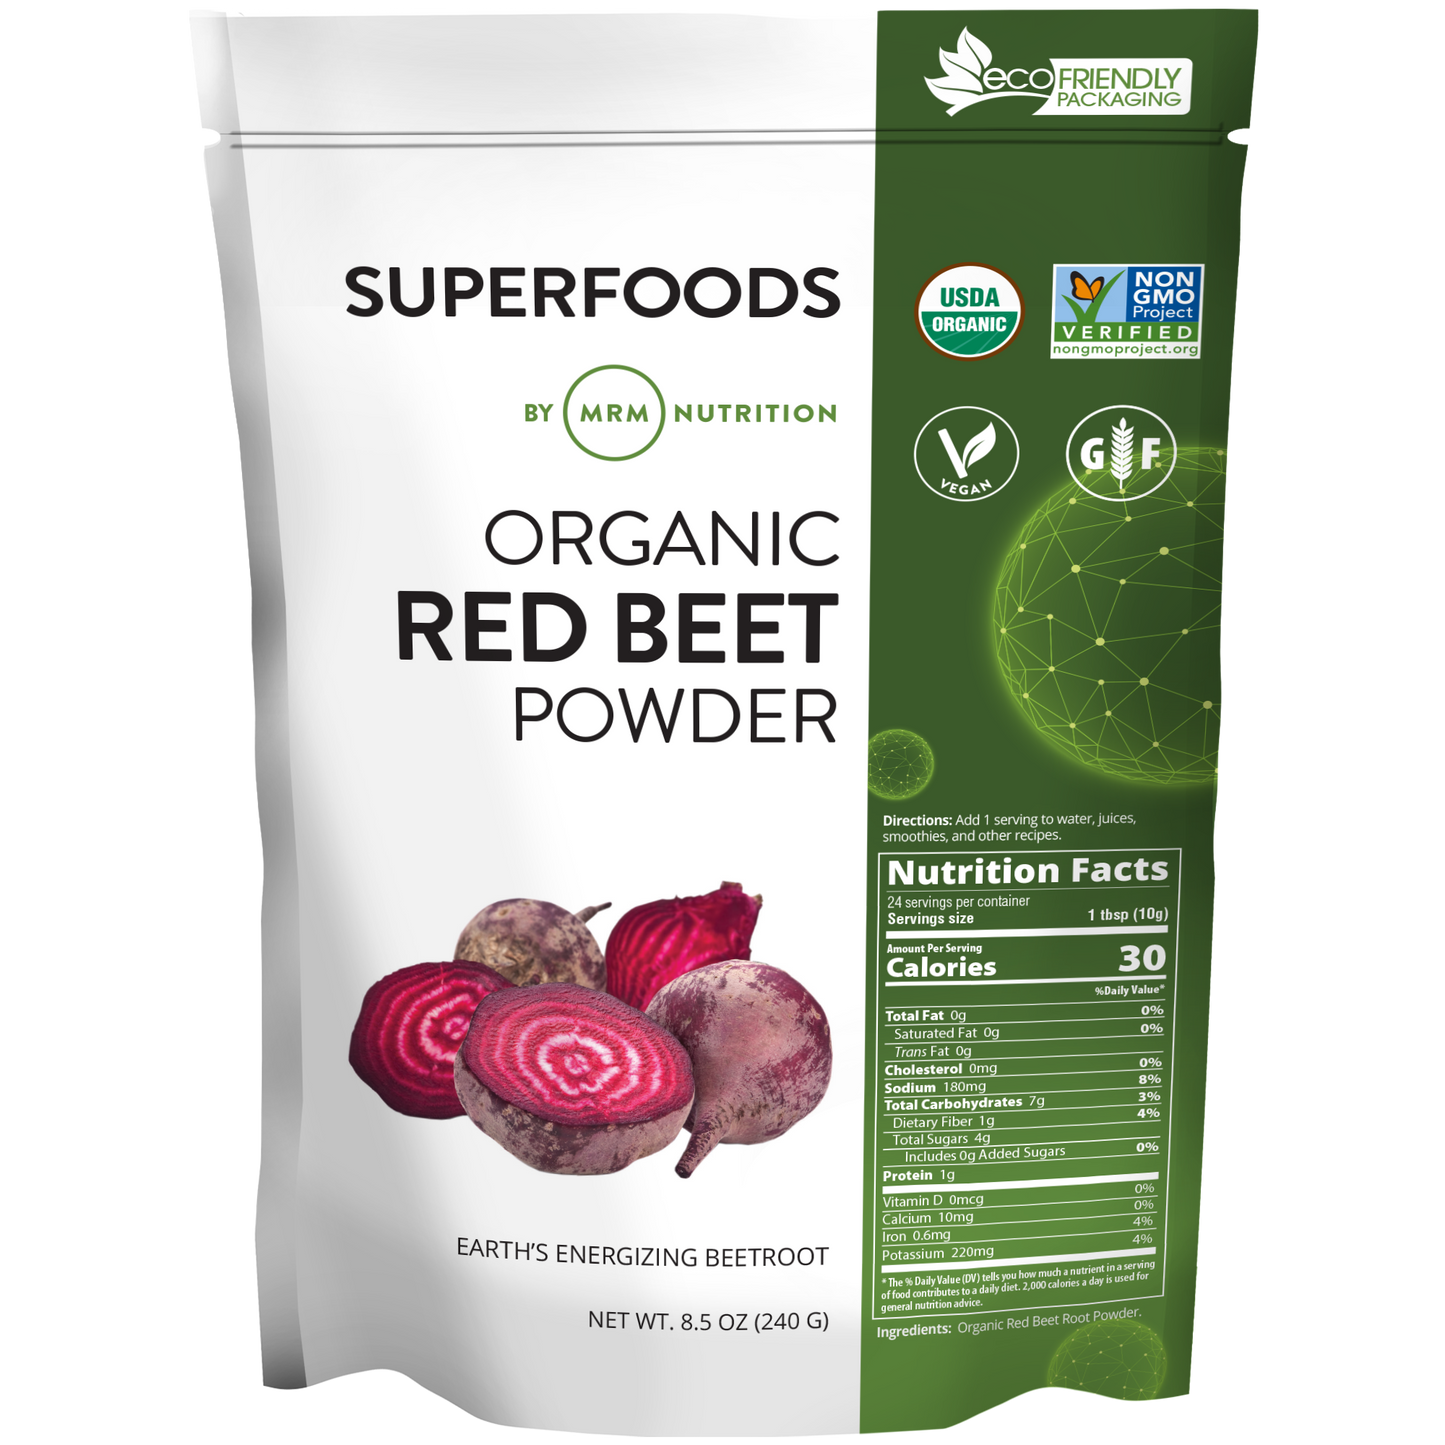 Superfoods - Organic Red Beet Powder